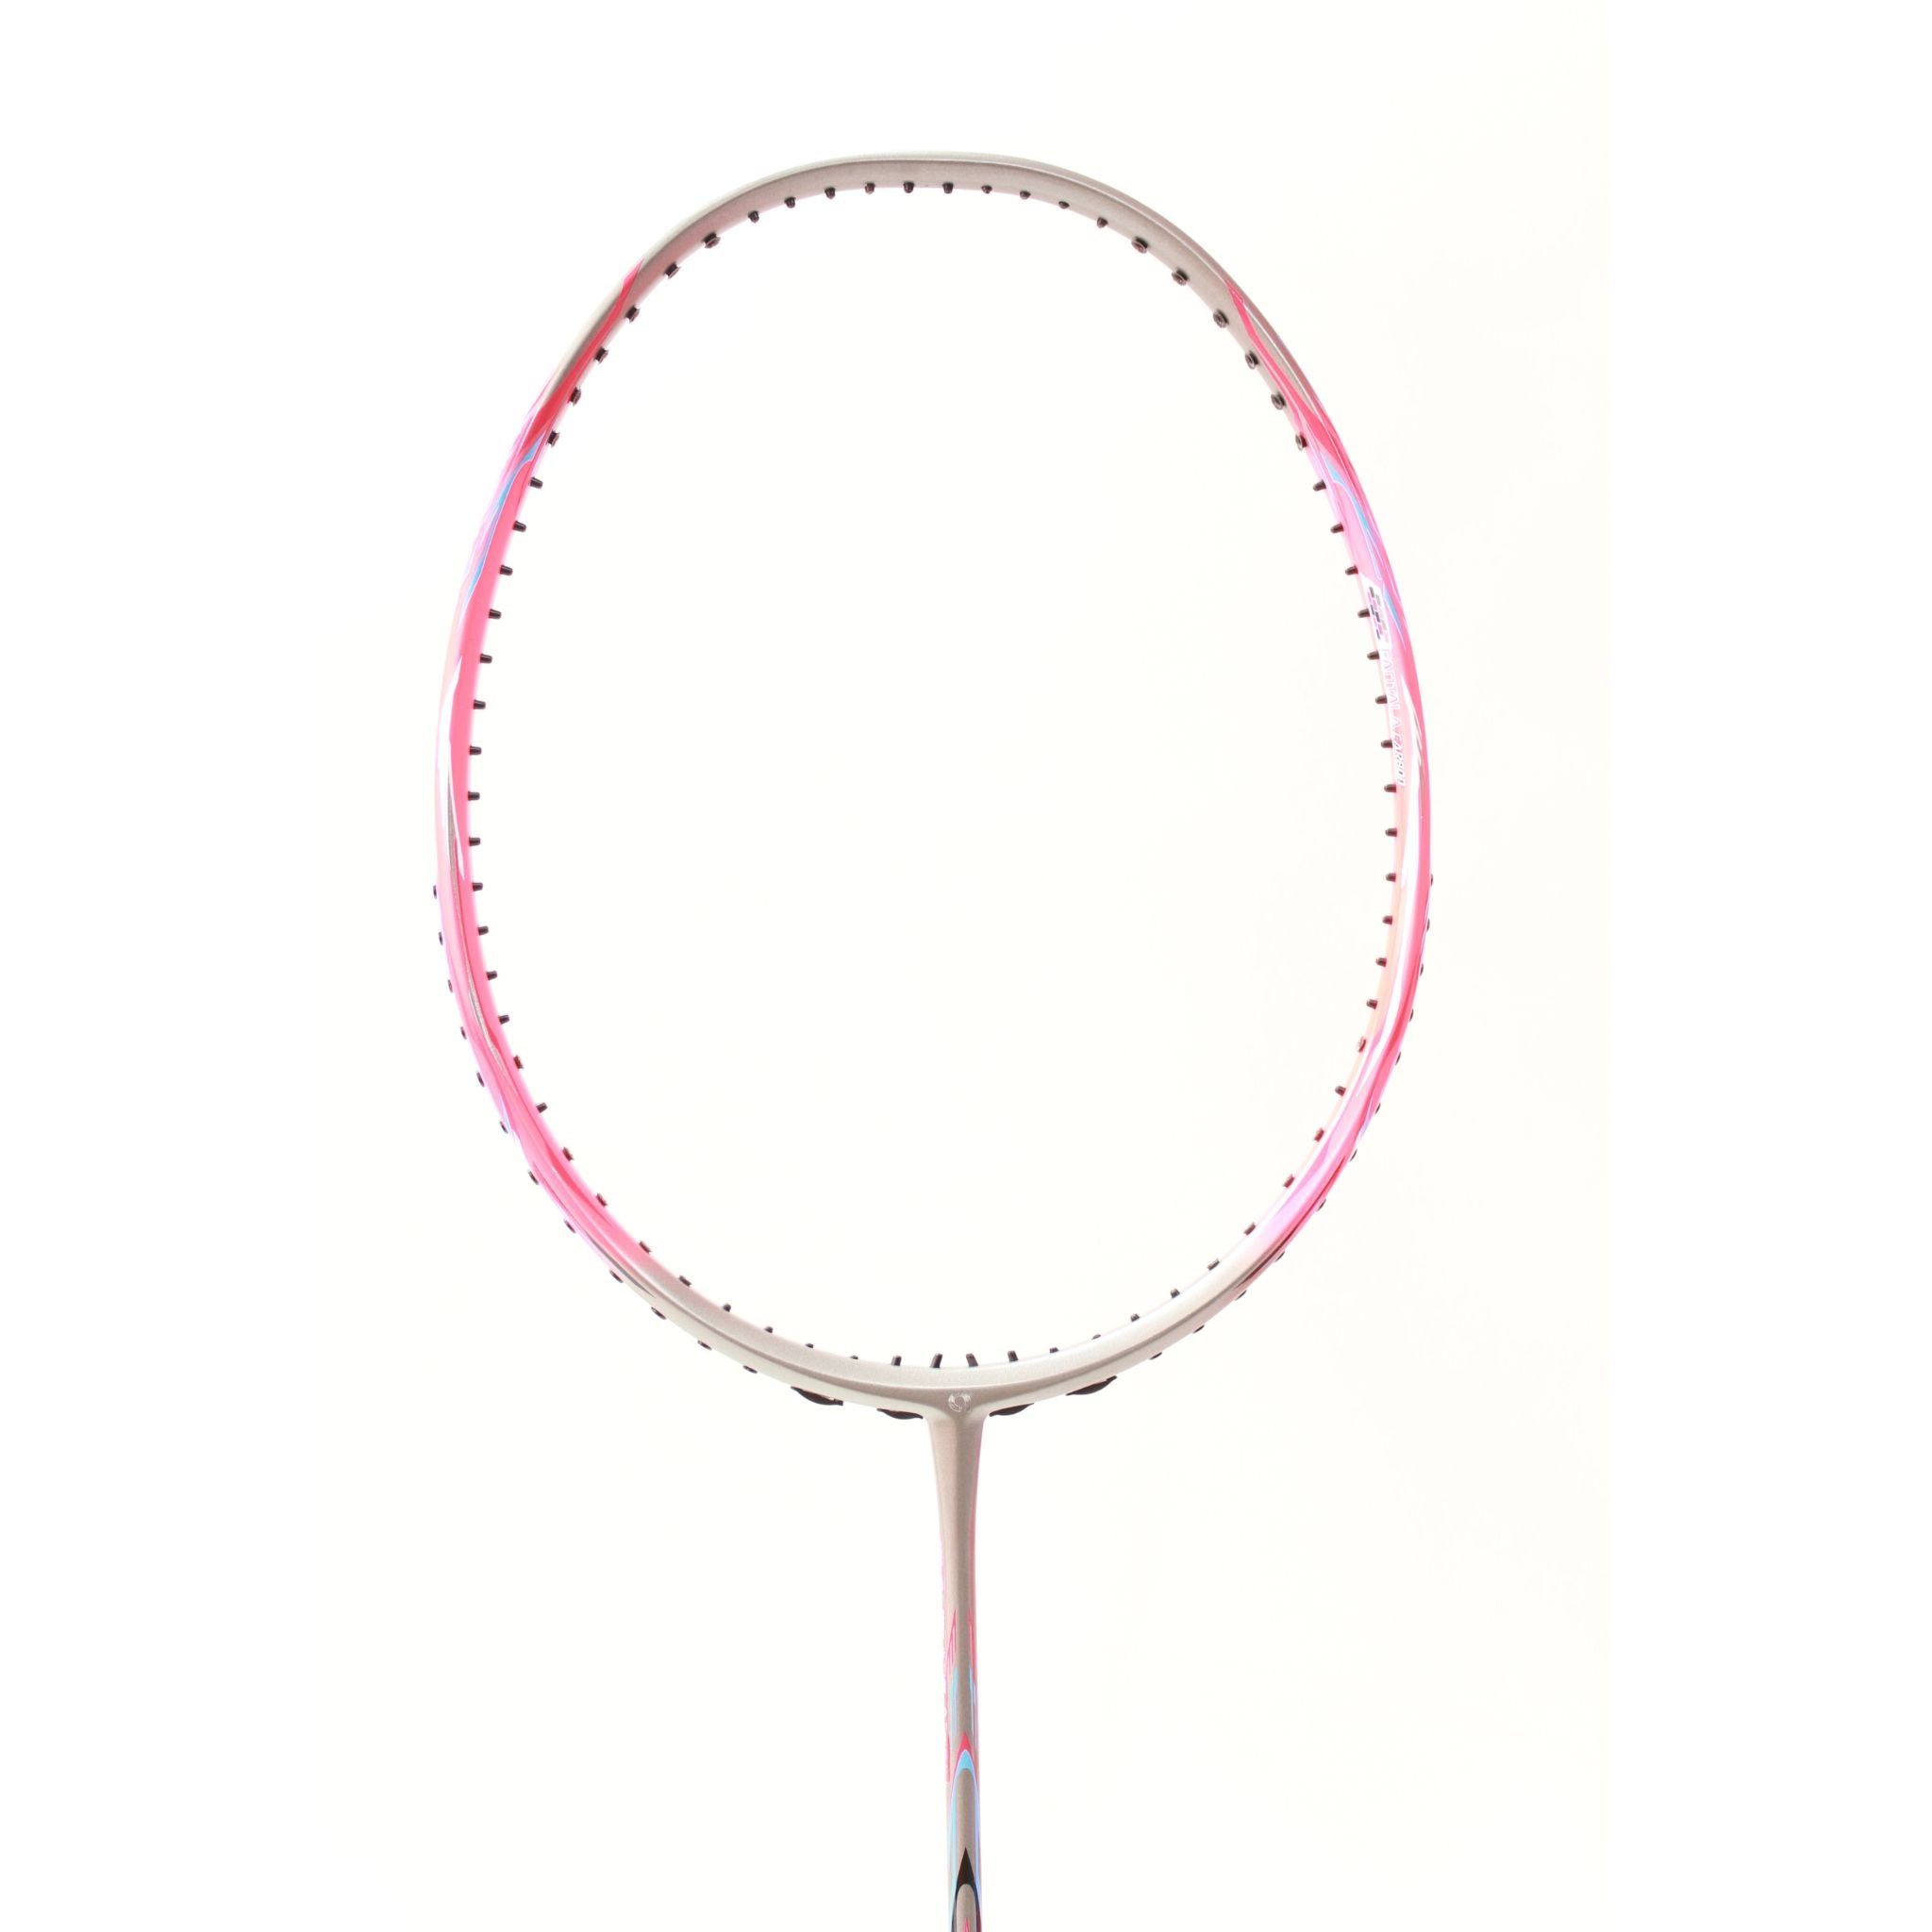 APACS Lee Hyun IL 68 Badminton Racket